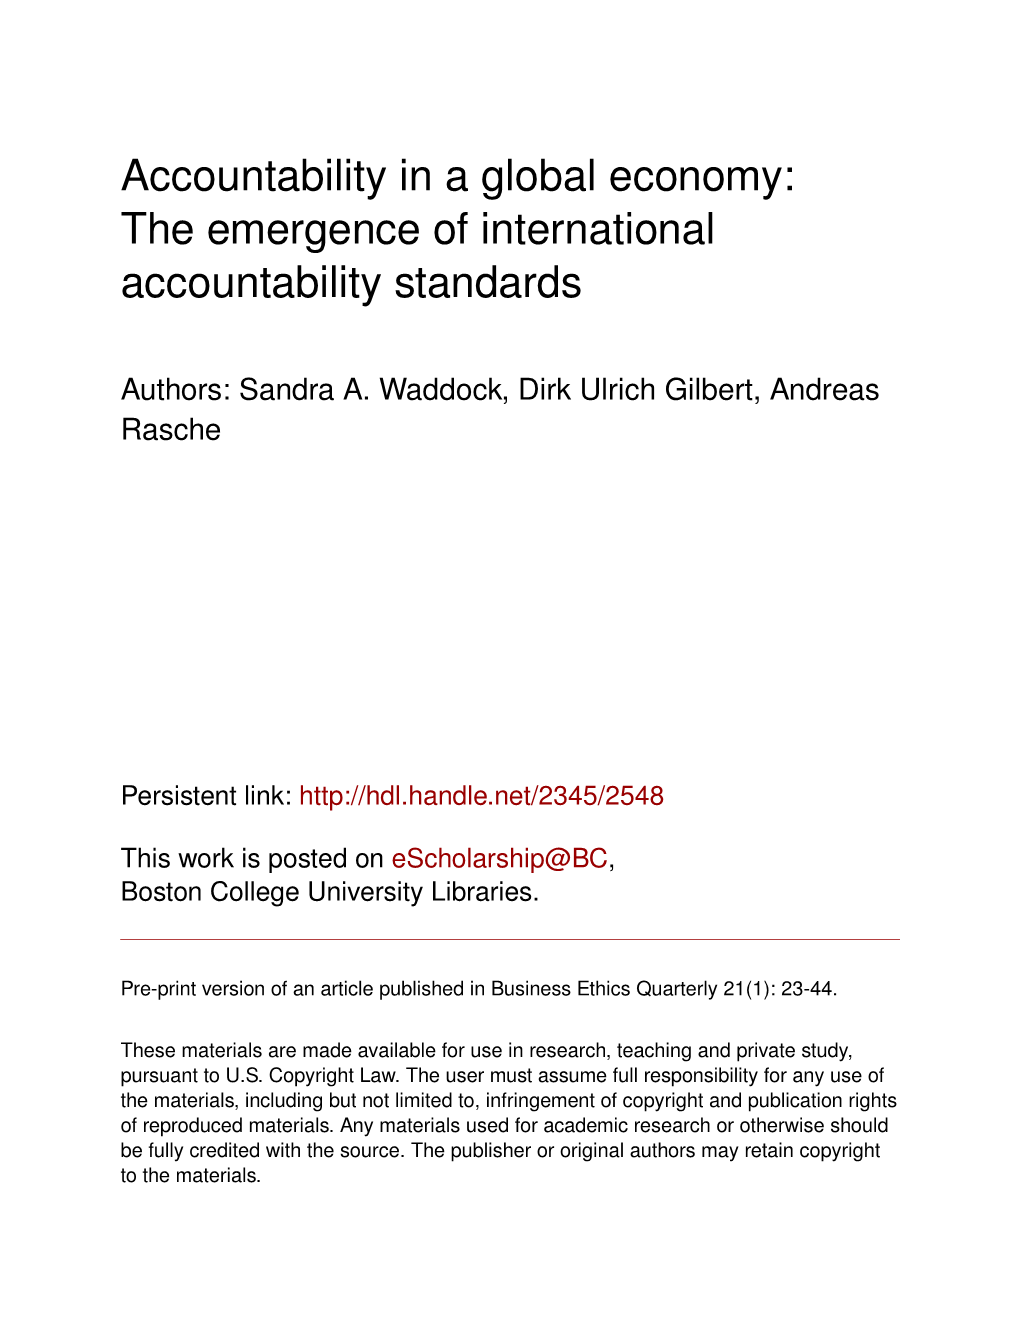 Accountability in a Global Economy: the Emergence of International Accountability Standards